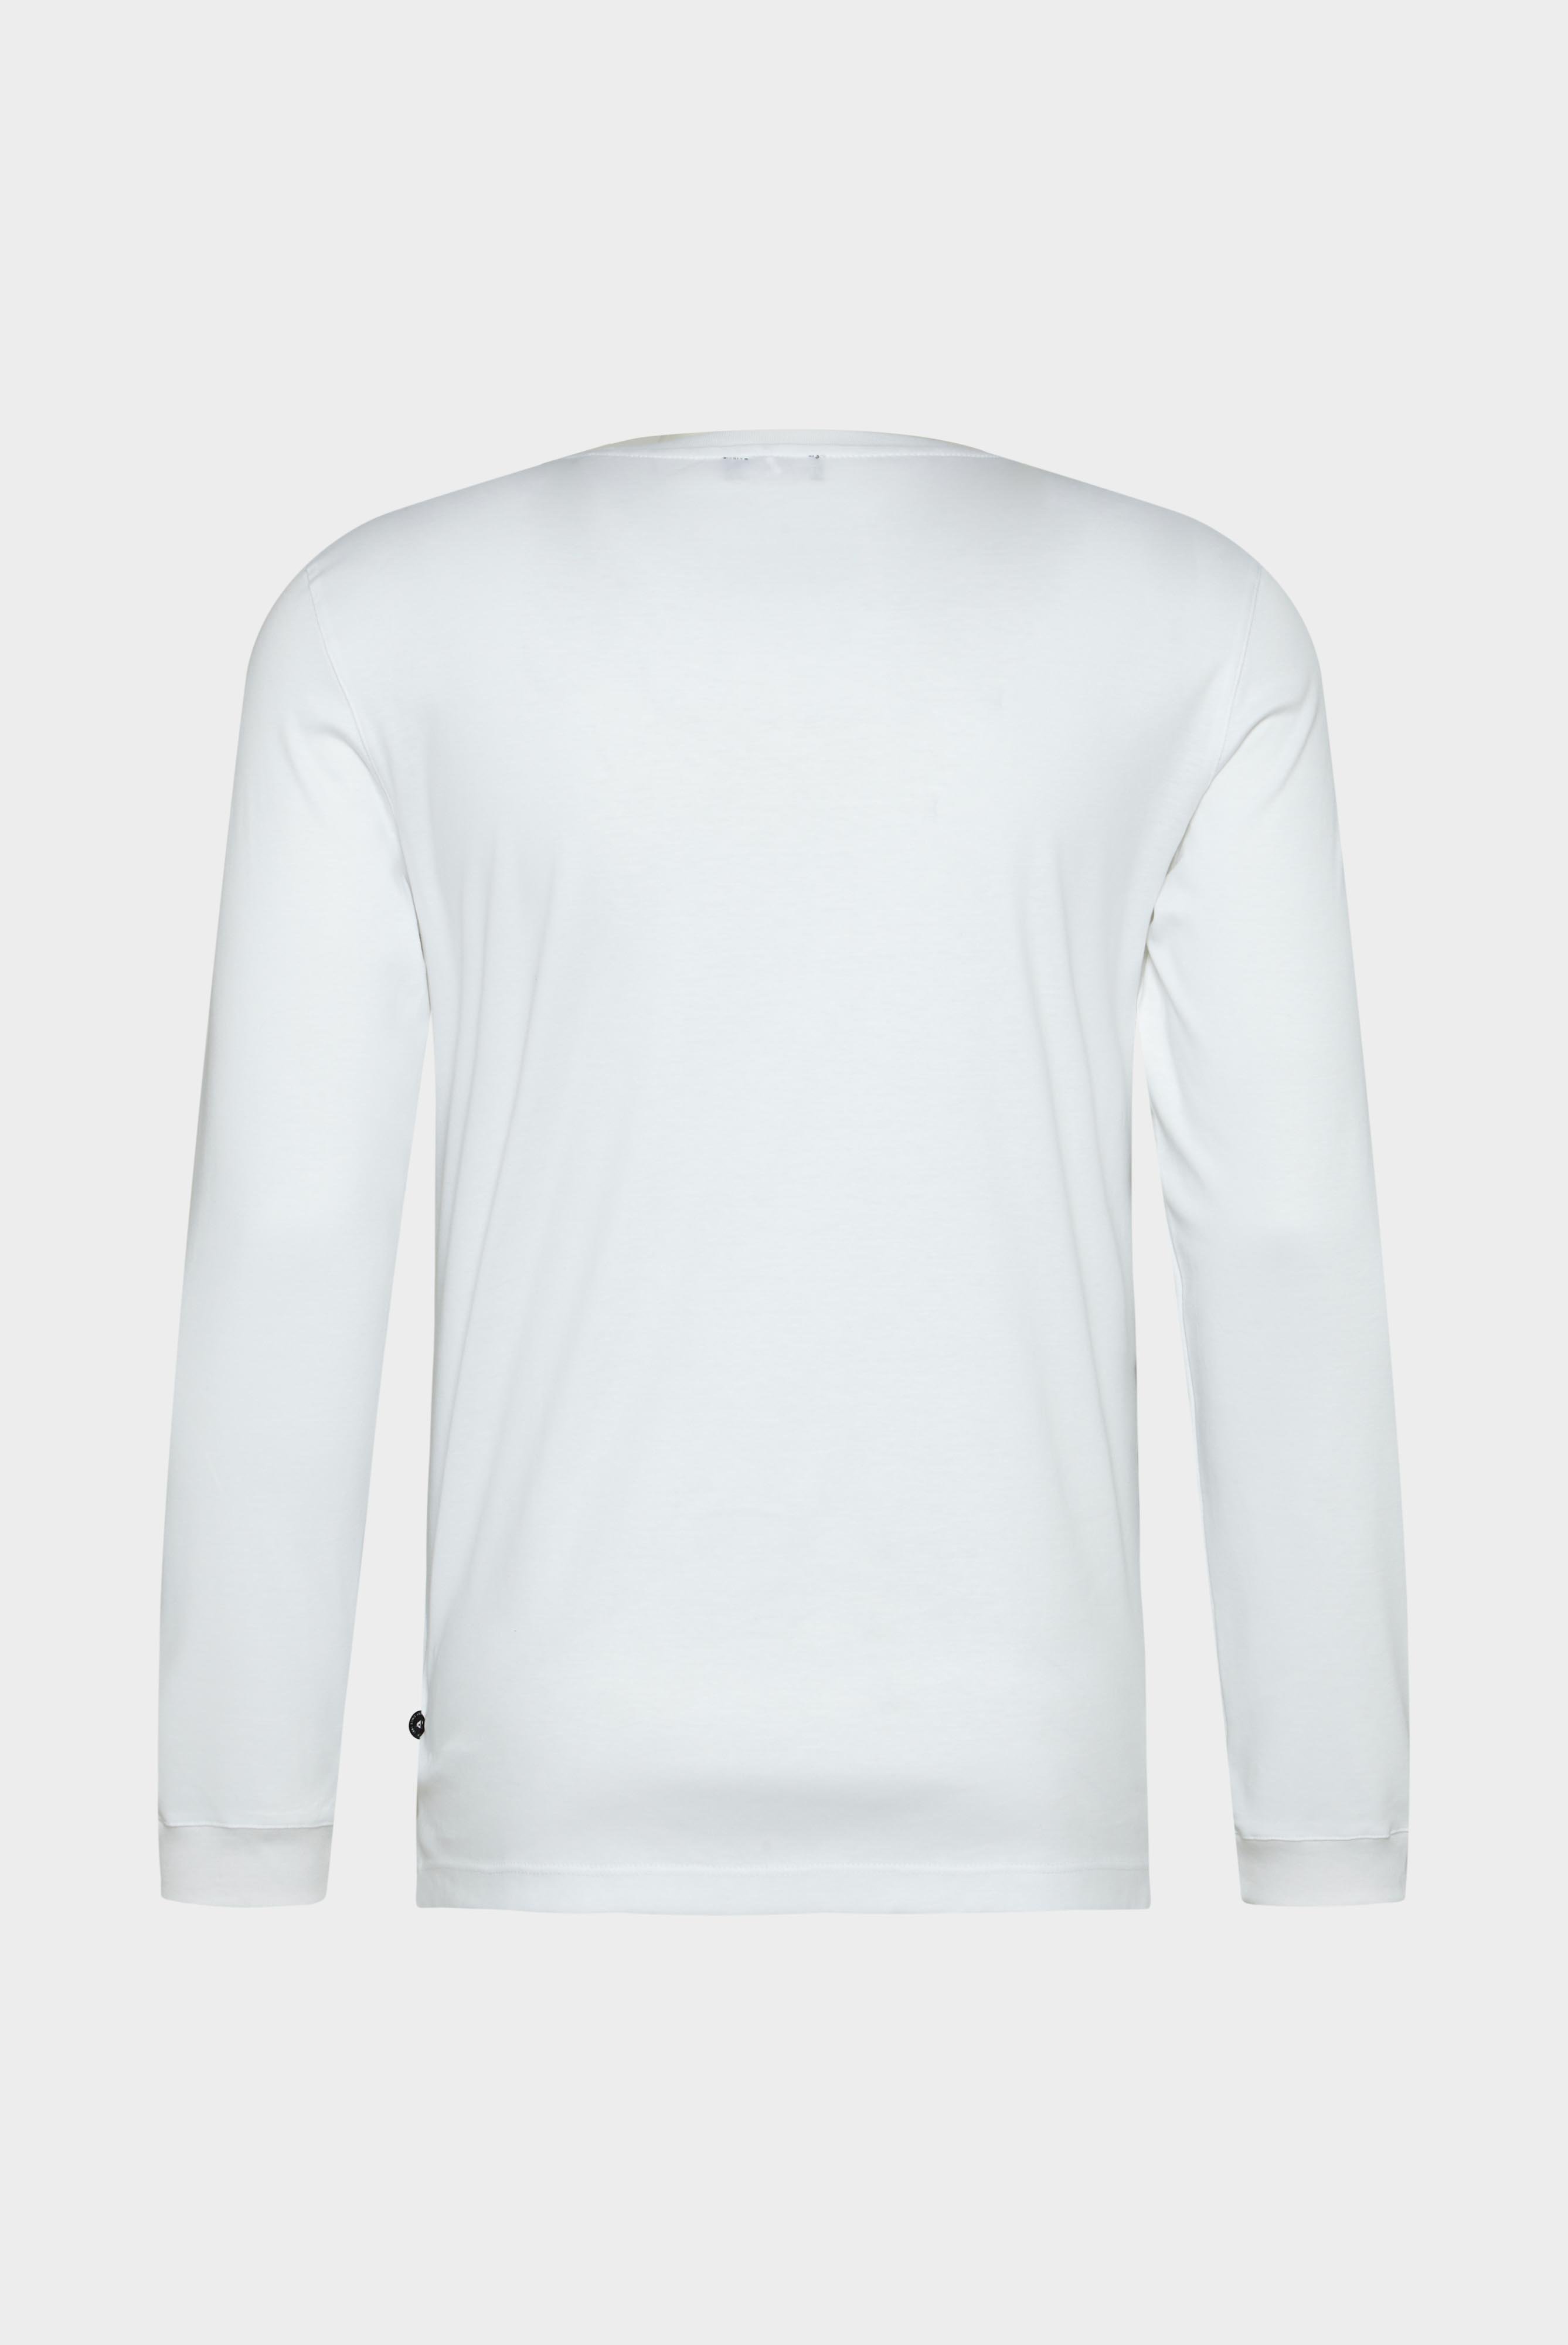 T-Shirts+Langarm Jersey T-Shirt mit Rundhals Slim Fit+20.1718.UX.180031.000.S